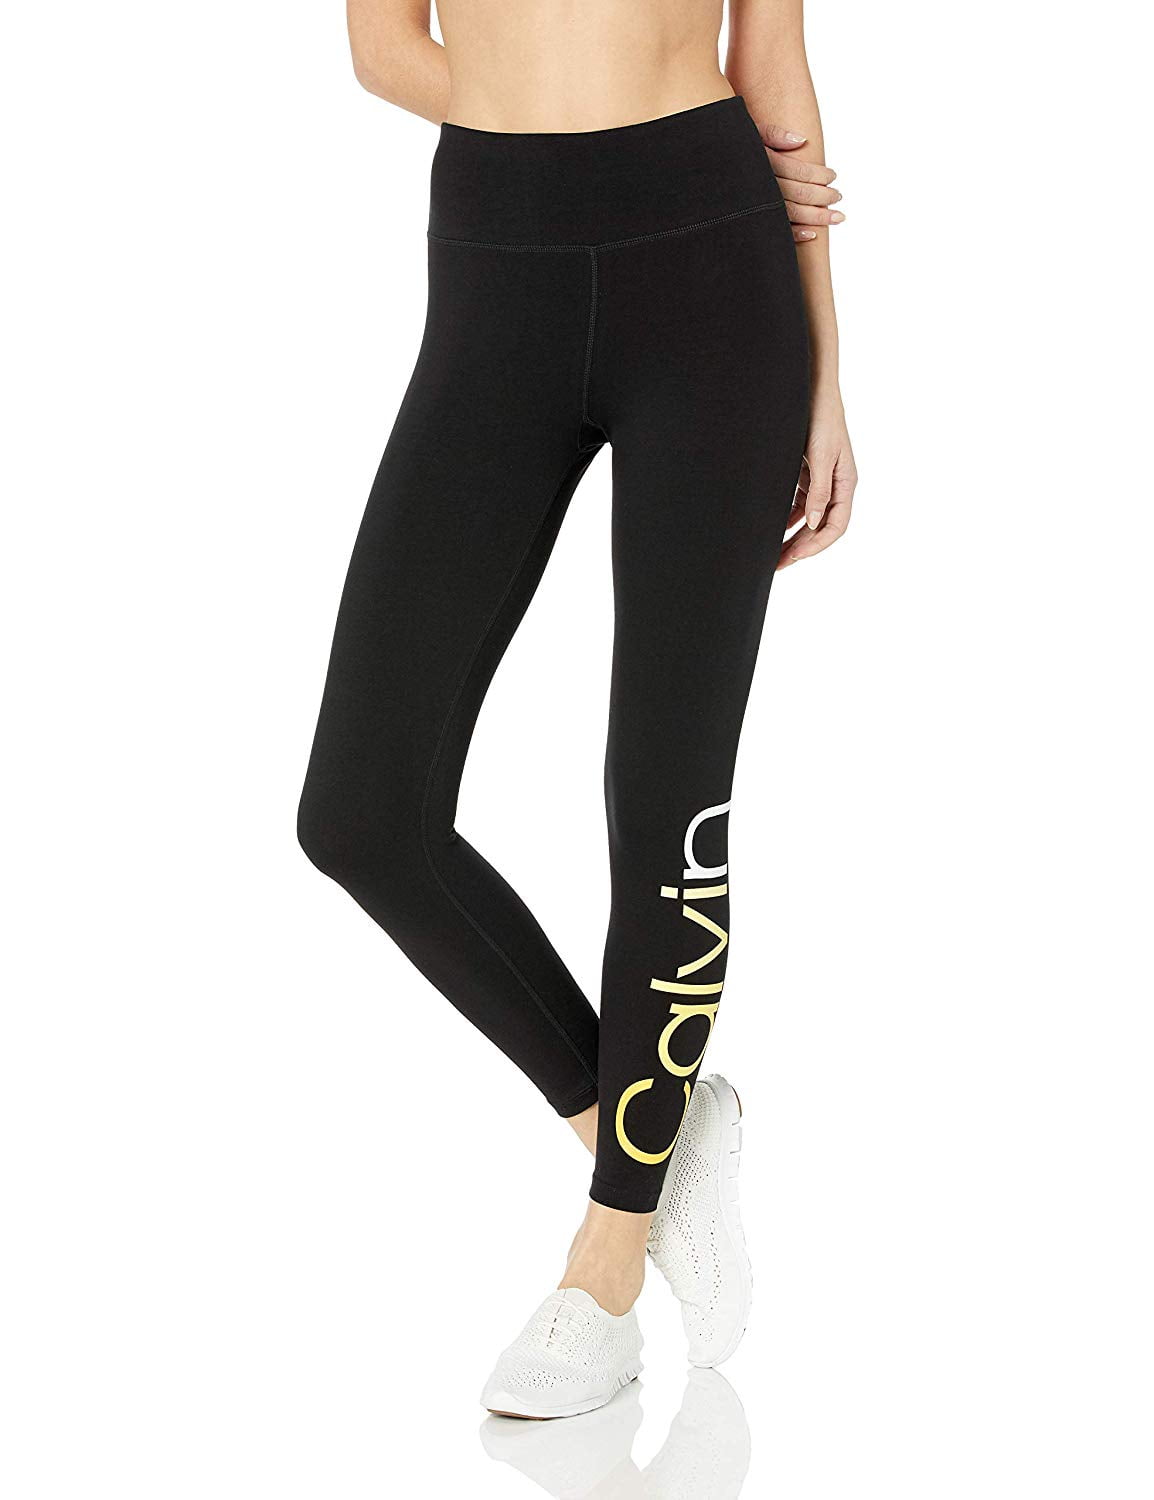 Vivian's Fashions Capri Leggings - Cotton, Misses Size (Yellow, 1X) -  Walmart.com